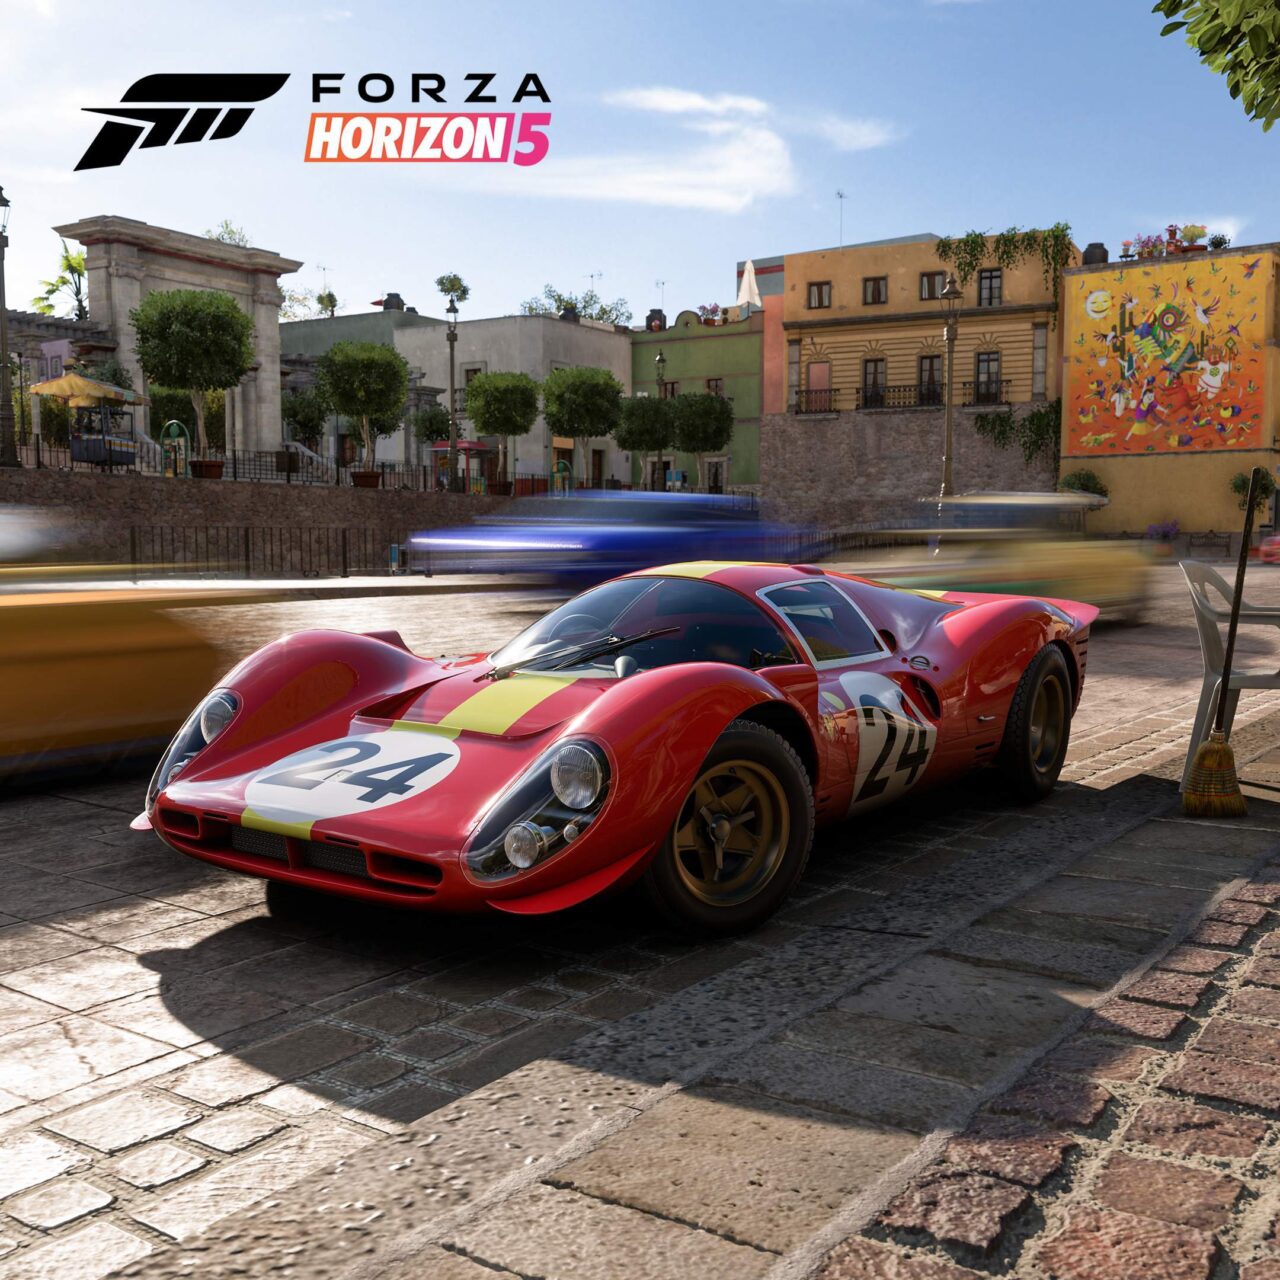 La próxima meta de Forza Horizon 5: 20 millones de corredores